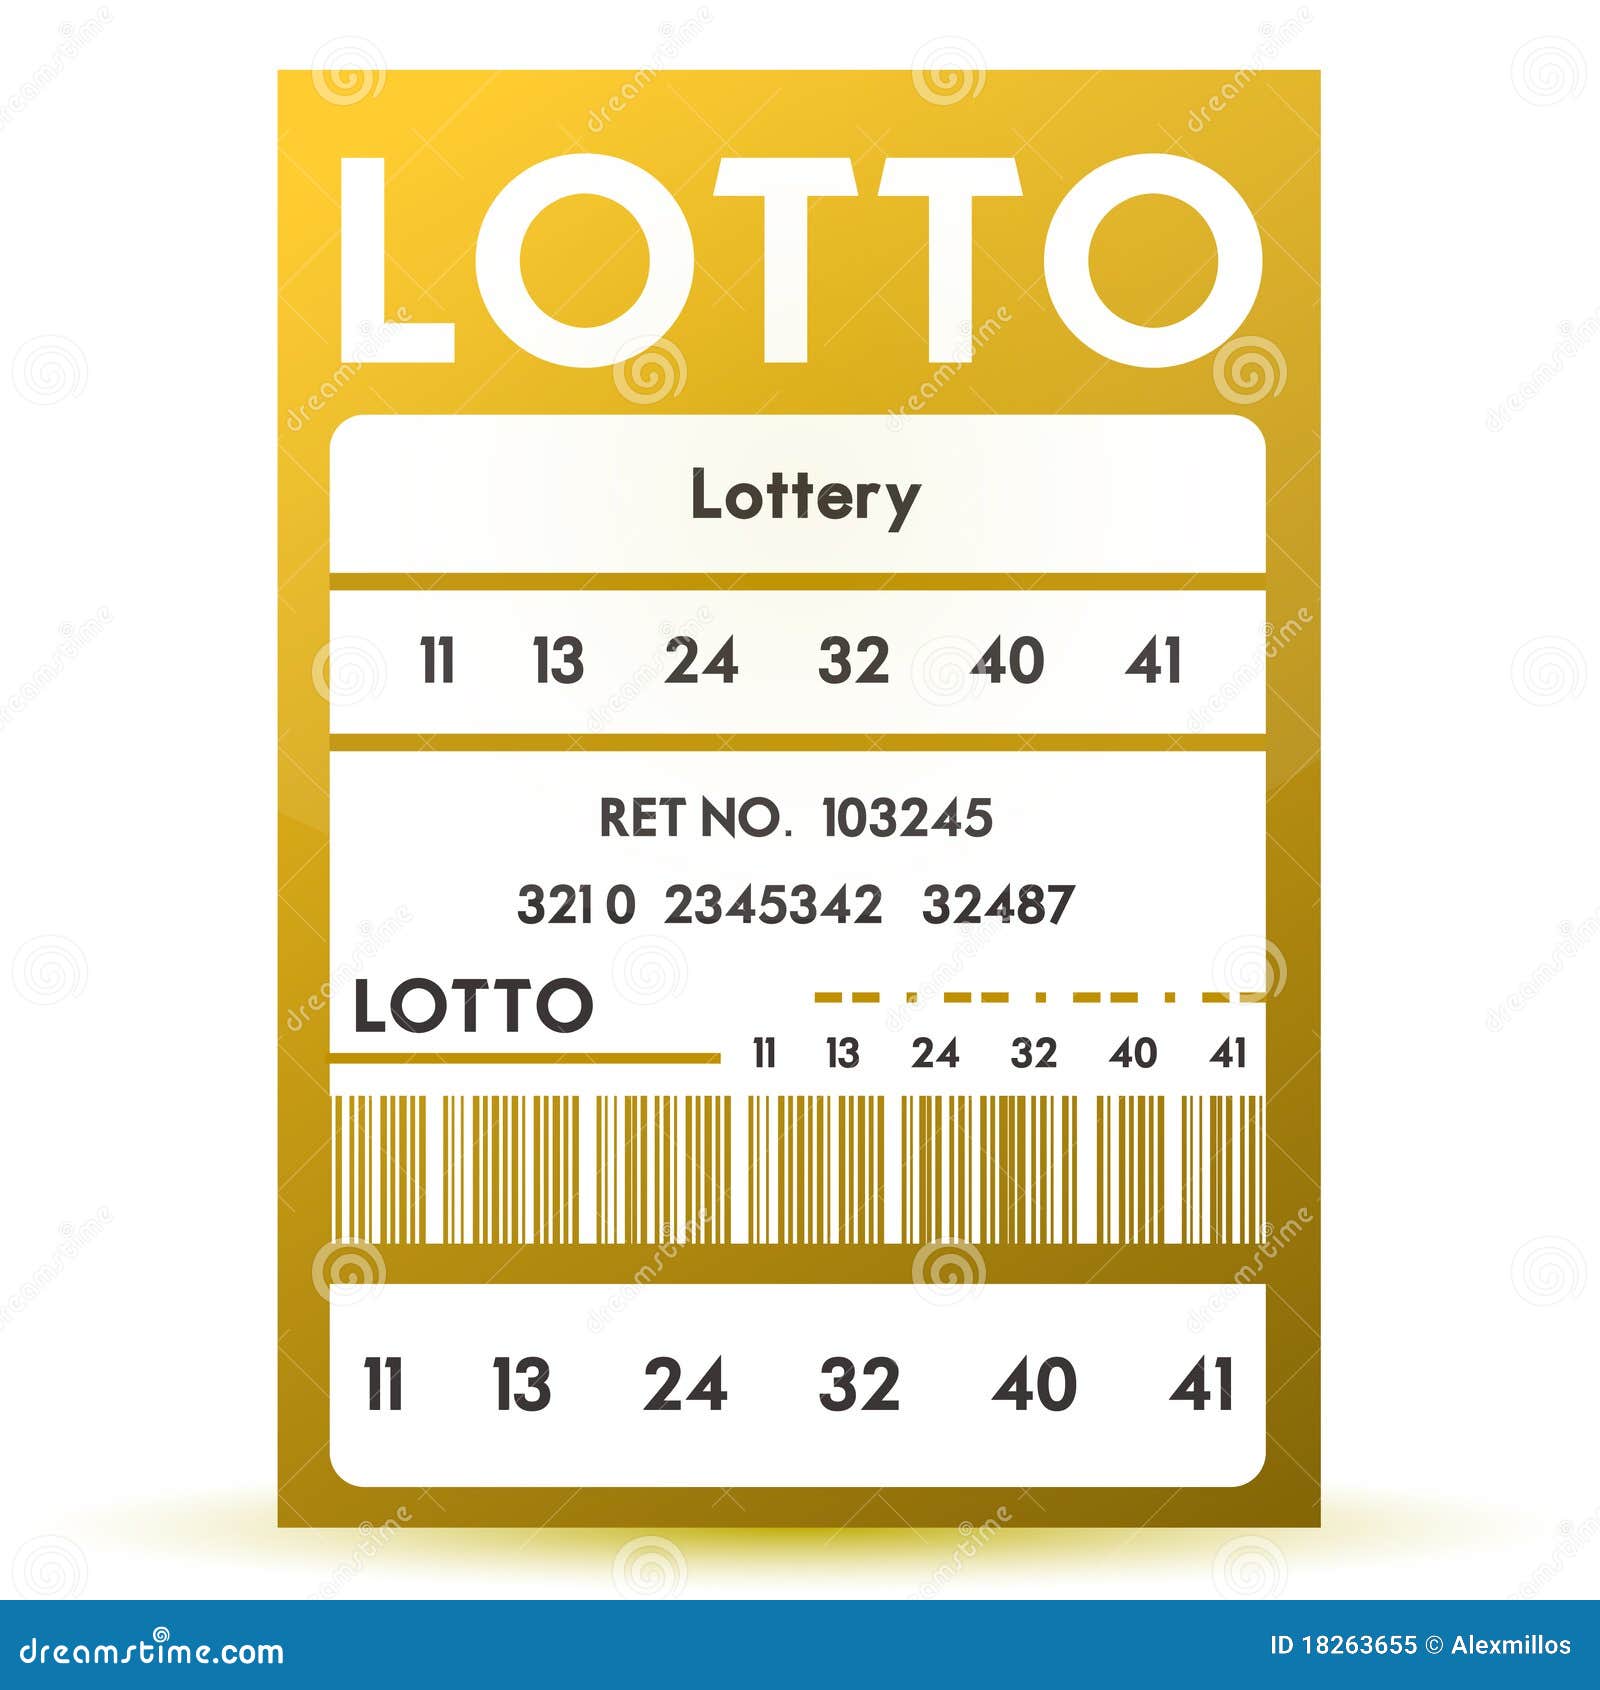 Free lotto ticket redeemed in Lethbridge a big winner - My Lethbridge Now